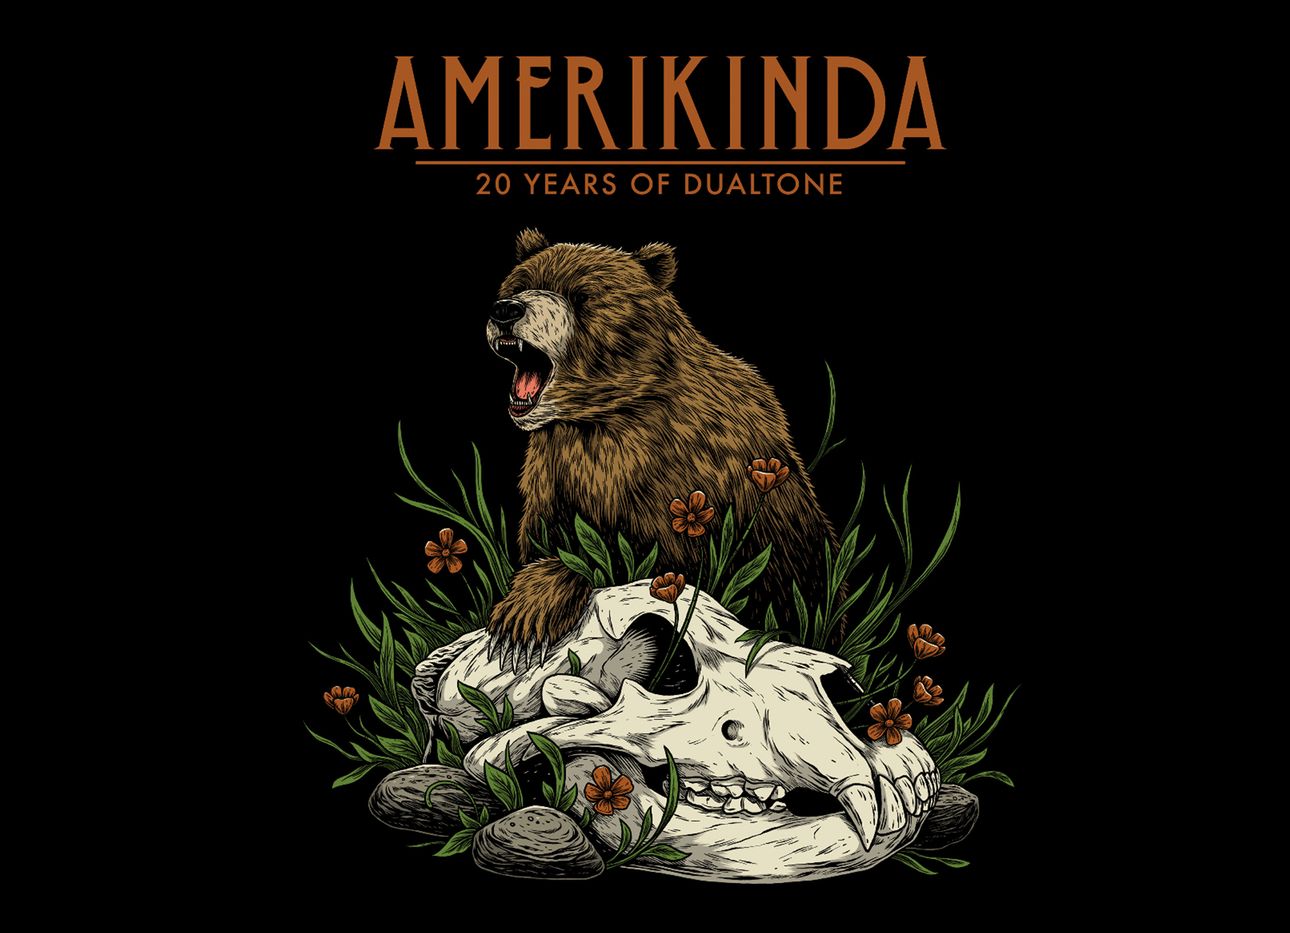 Amerikinda album cover